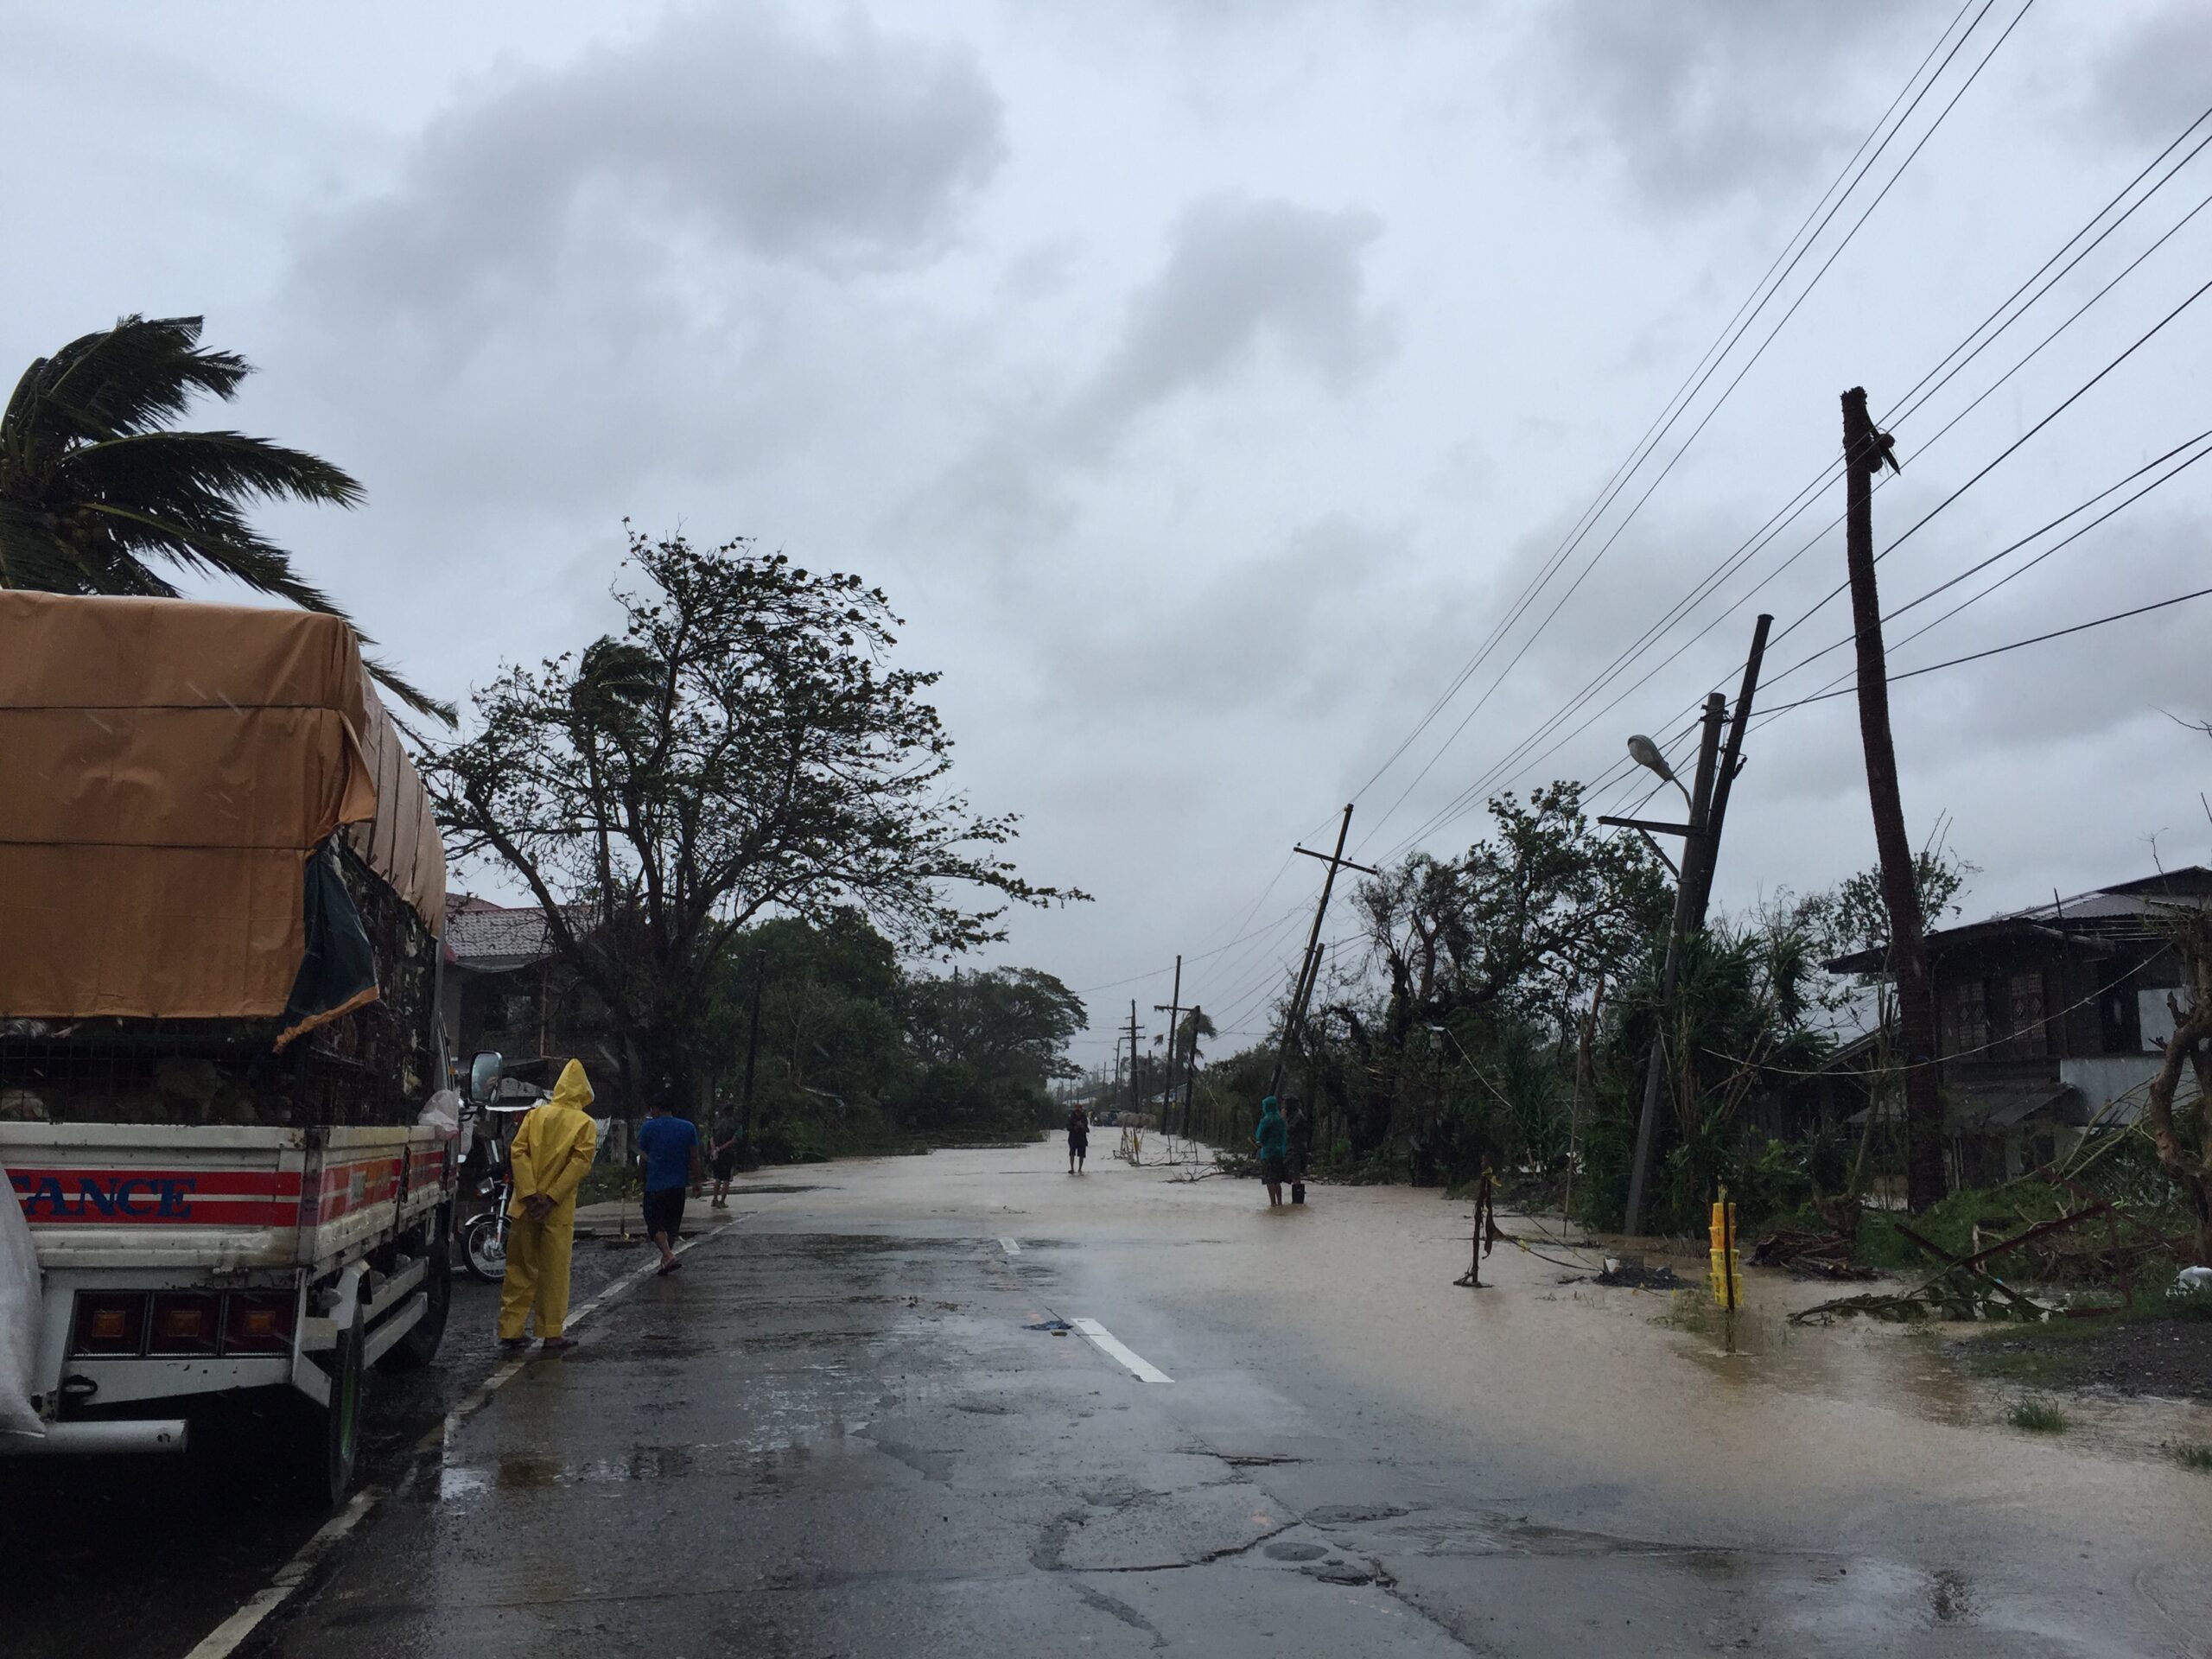 IN PHOTOS: Floods, fallen trees in Ilocos Sur